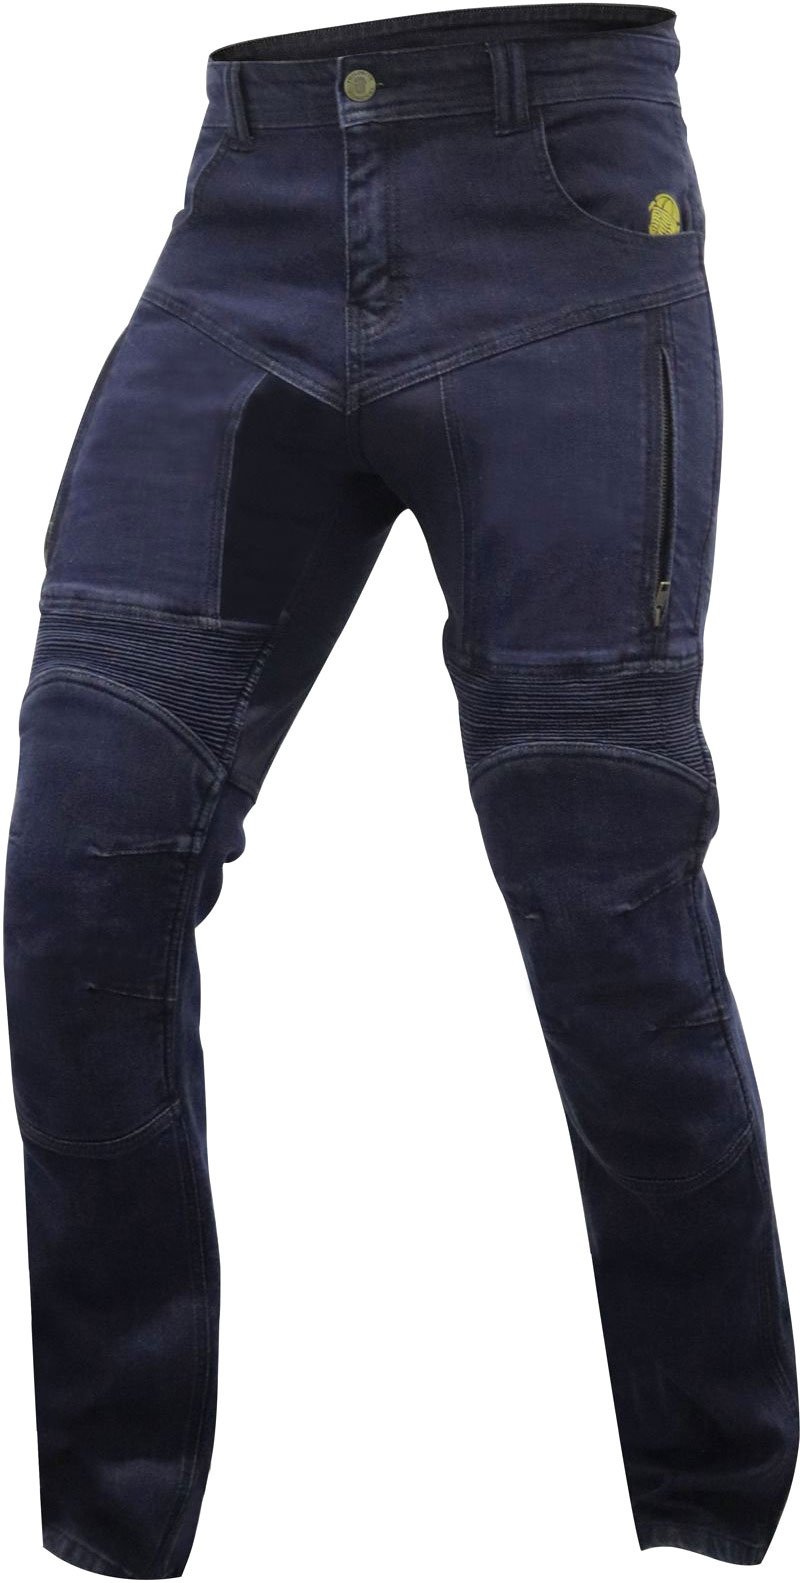 Trilobite Parado, jeans coupe ajustée - Bleu - 36